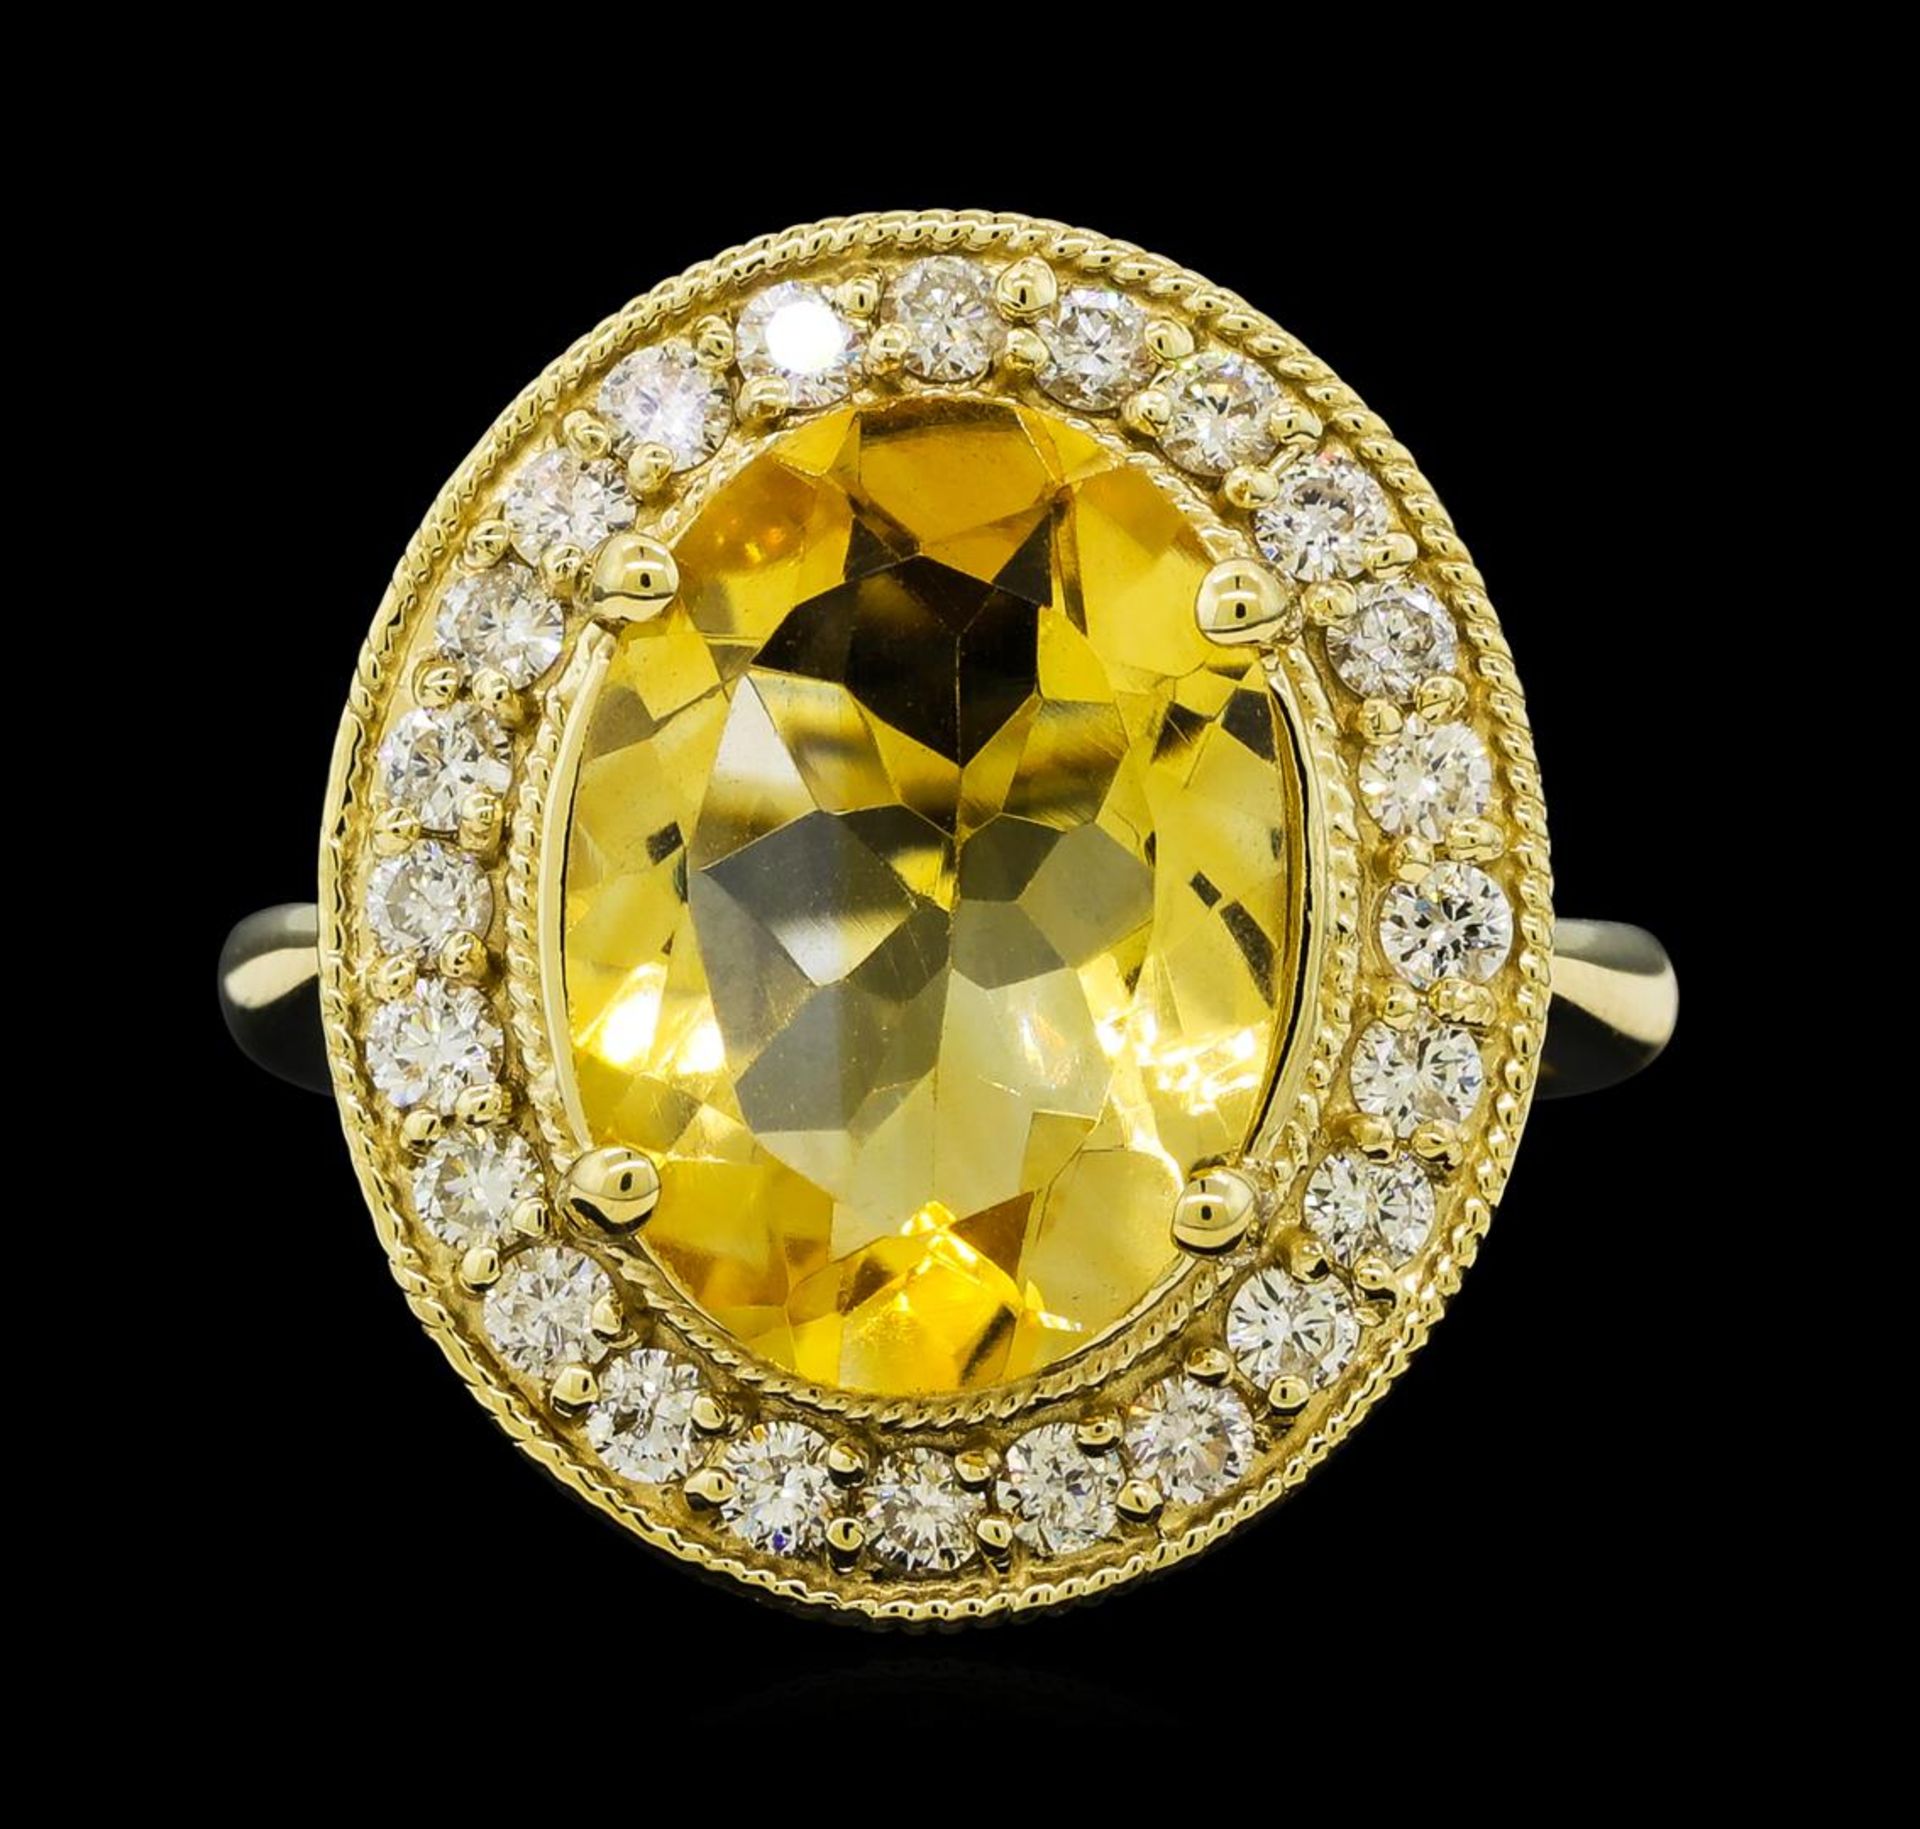 4.22 ctw Citrine Quartz and Diamond Ring - 14KT Yellow Gold - Image 2 of 4